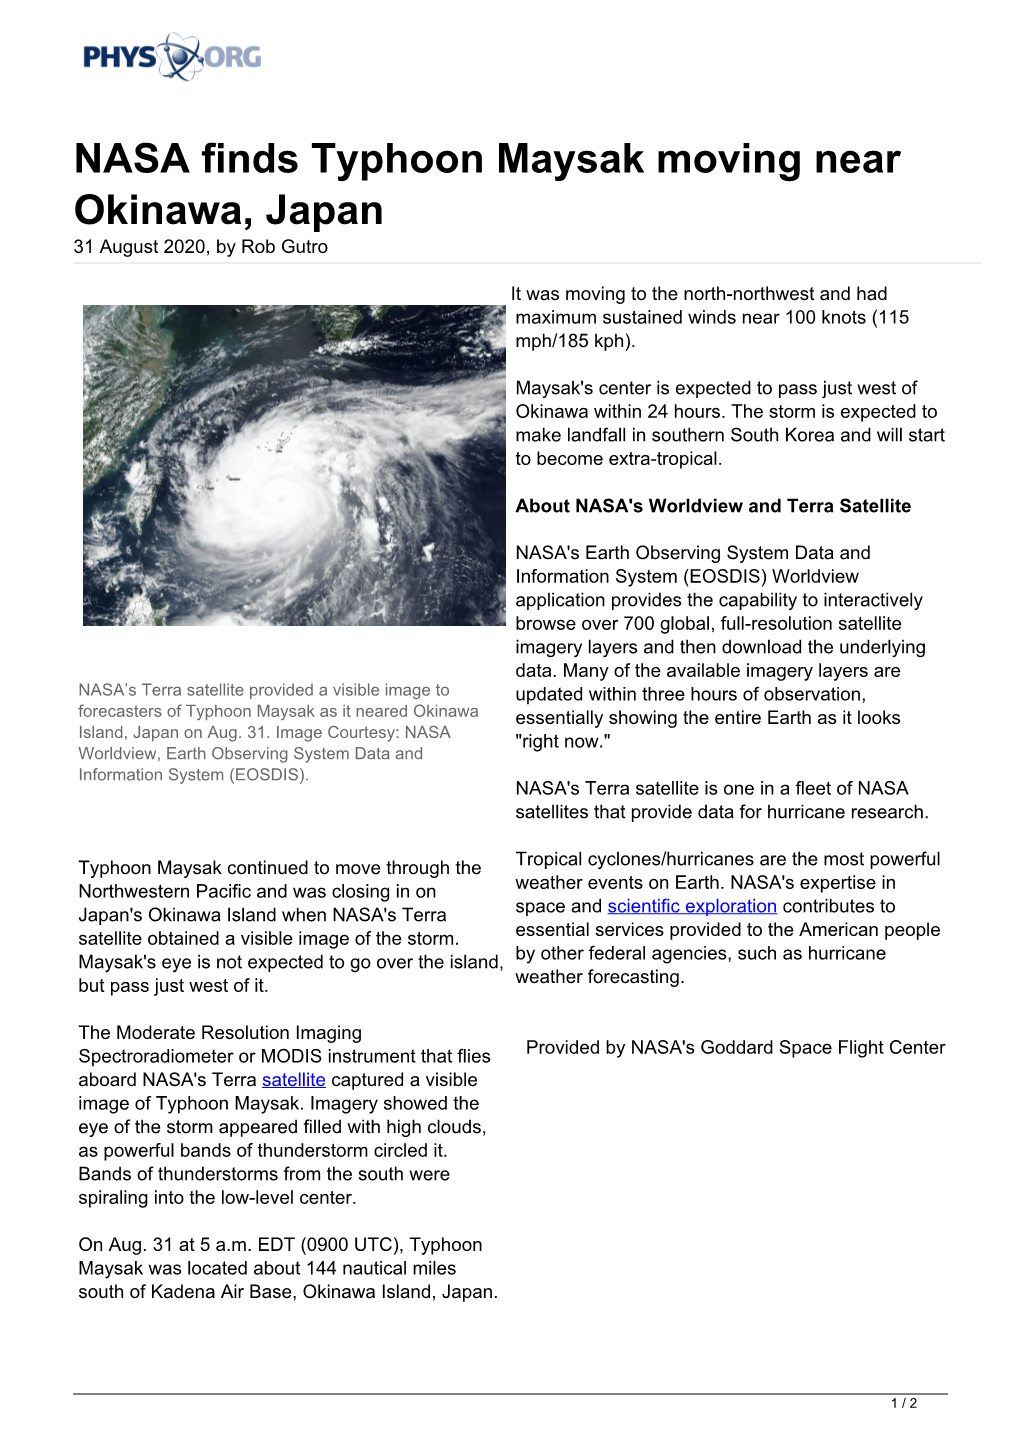 NASA Finds Typhoon Maysak Moving Near Okinawa, Japan 31 August 2020, by Rob Gutro